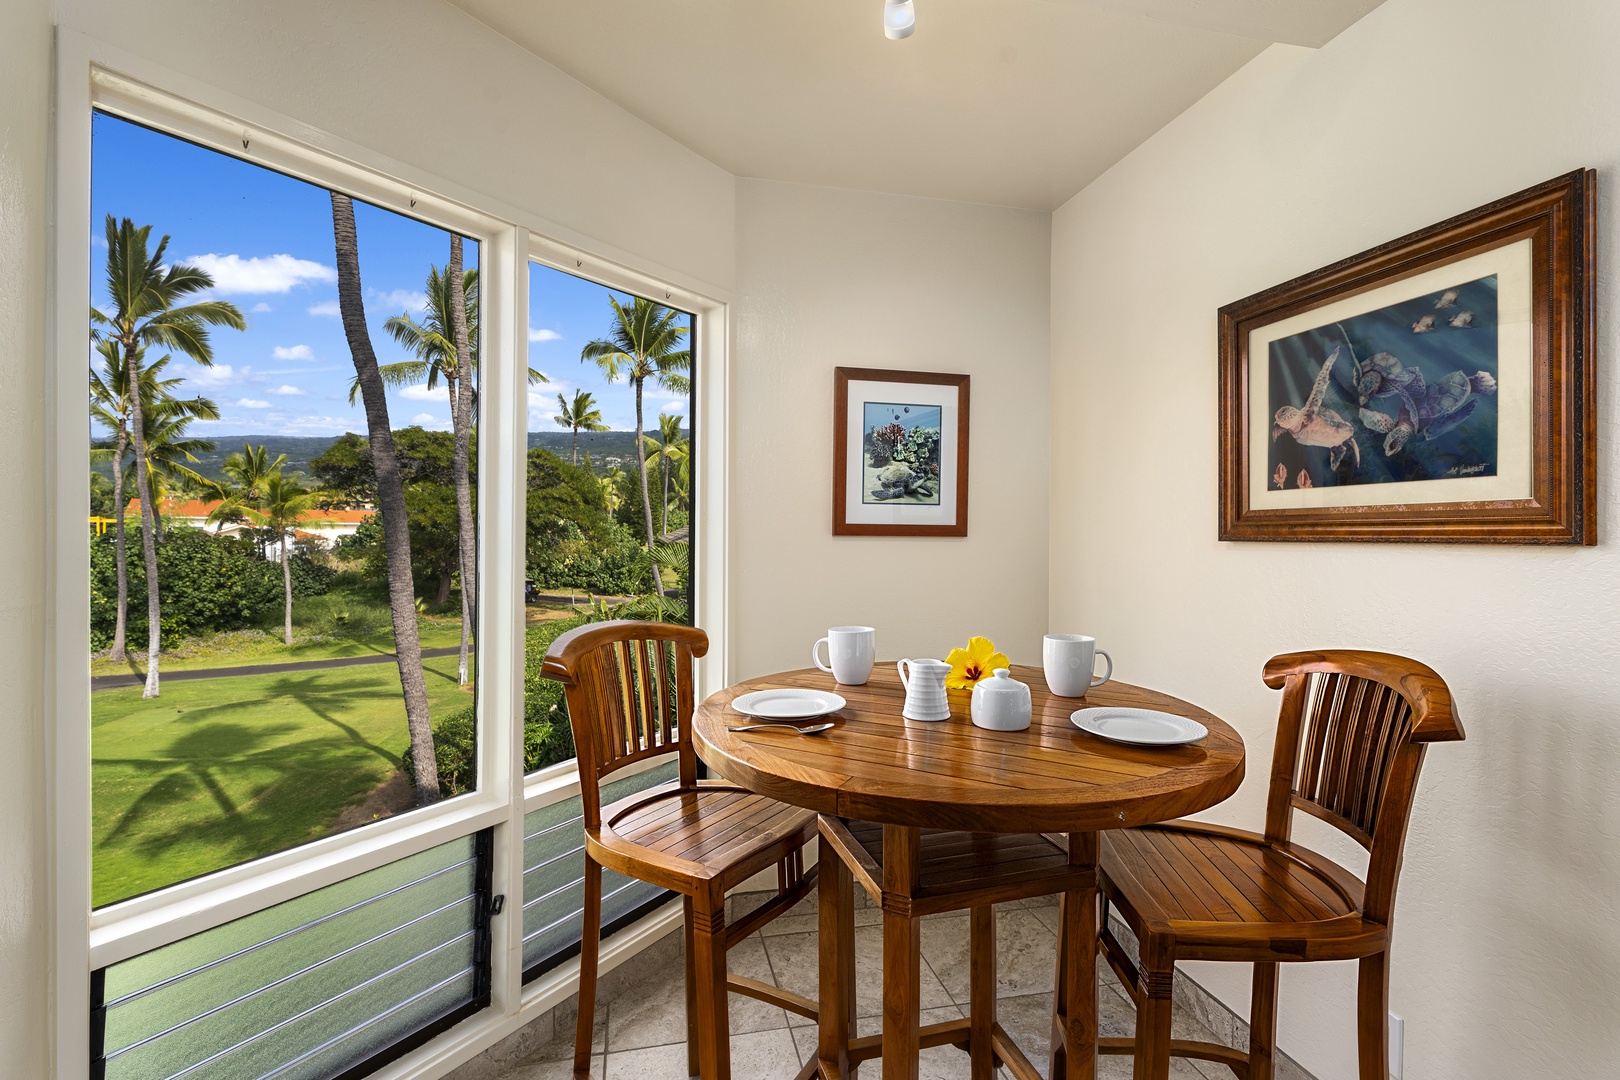 Kailua Kona Vacation Rentals, Kanaloa at Kona 1606 - Eat in Kitchen with golf course views!